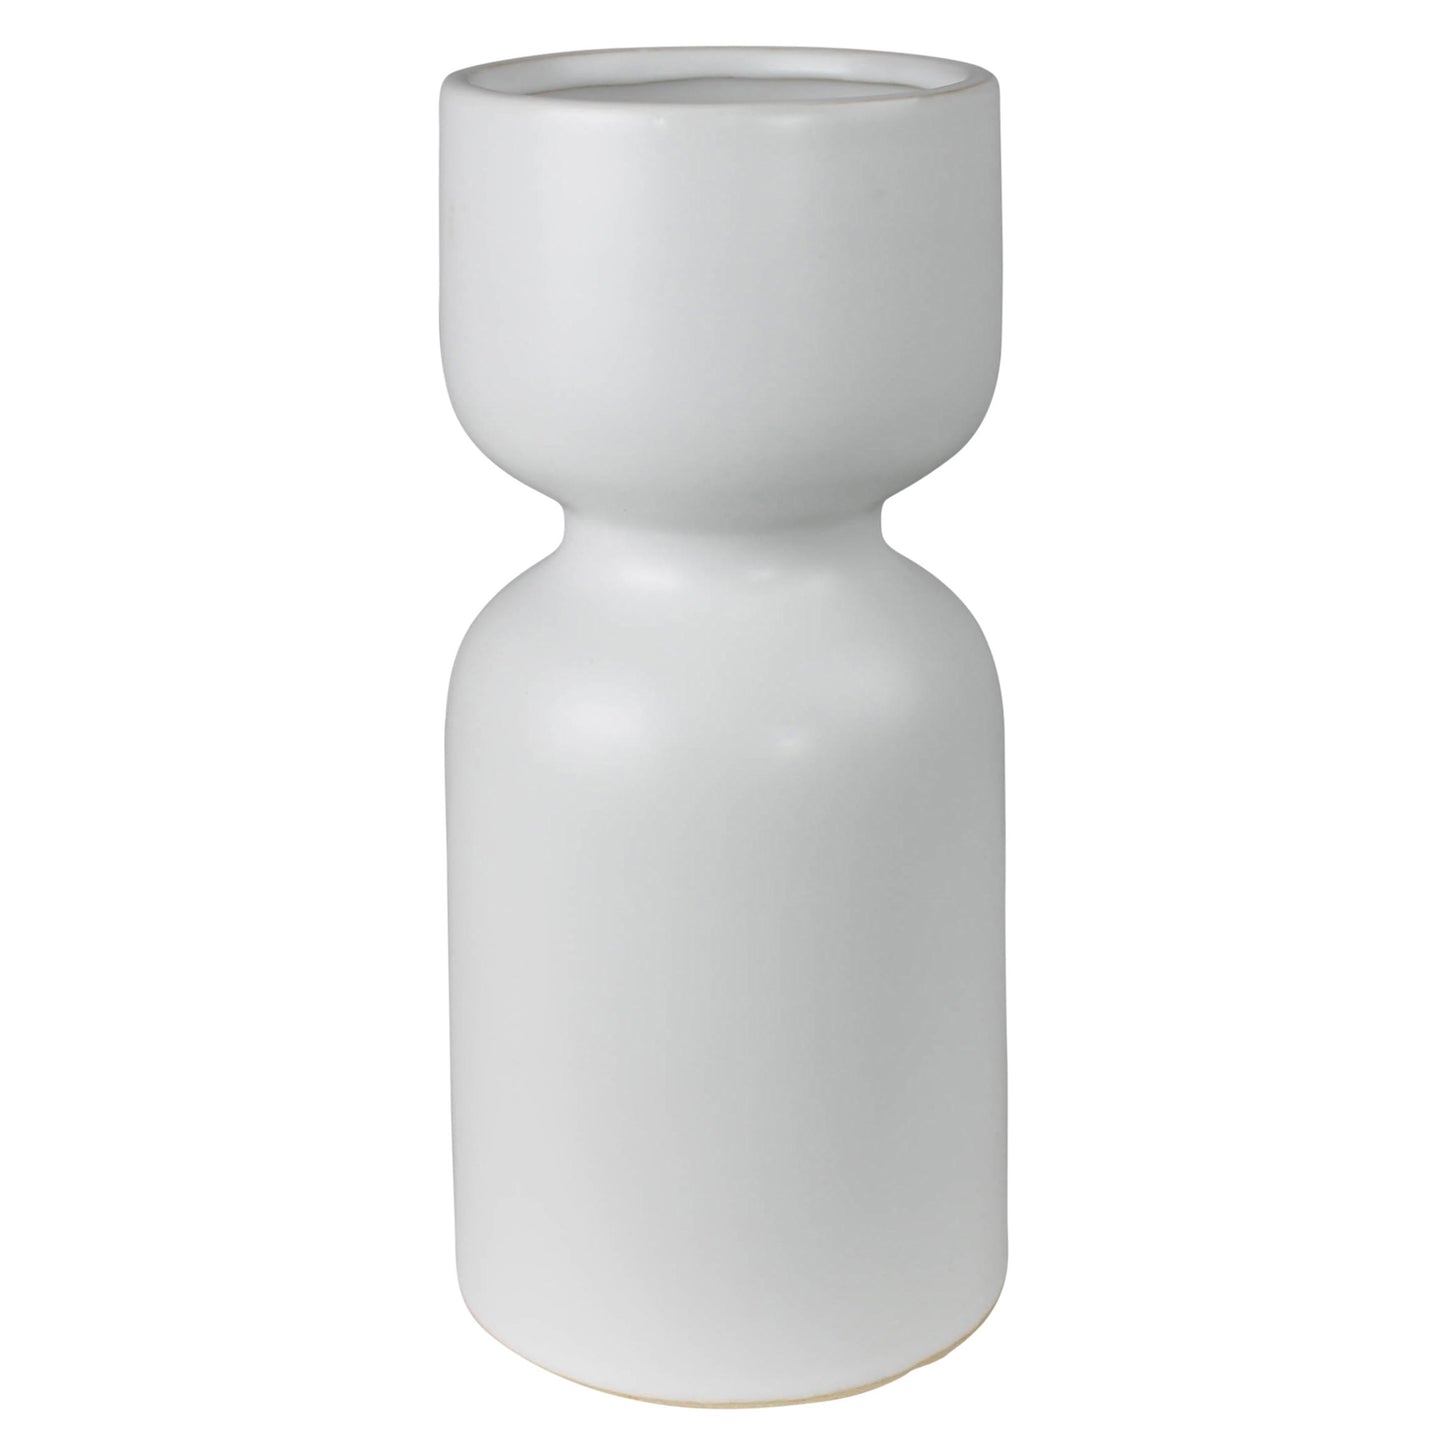 White ceramic rooting bulb vase.